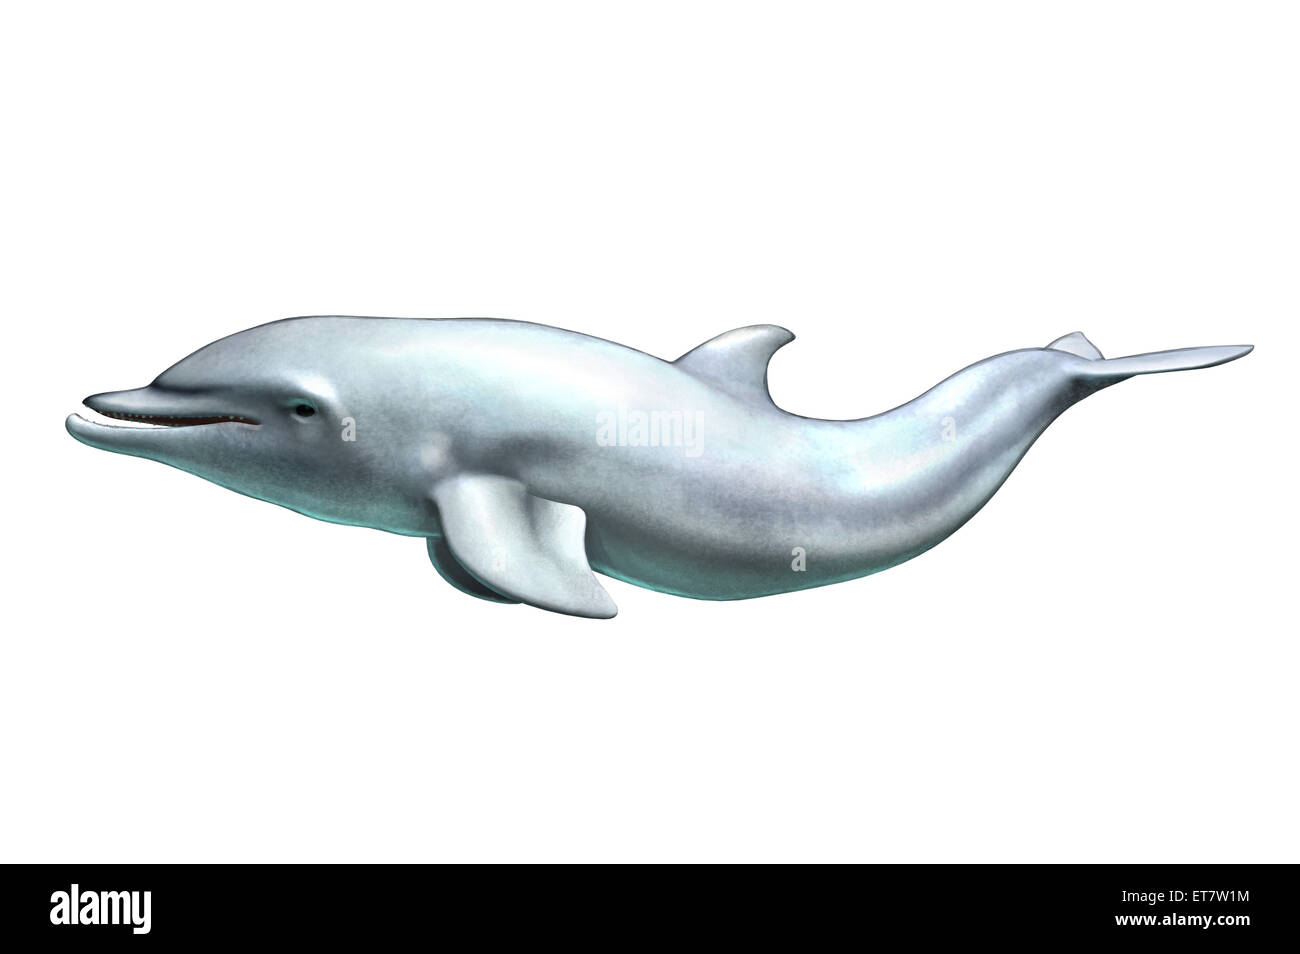 Dolphin, Illustration Technique, Stock Photo